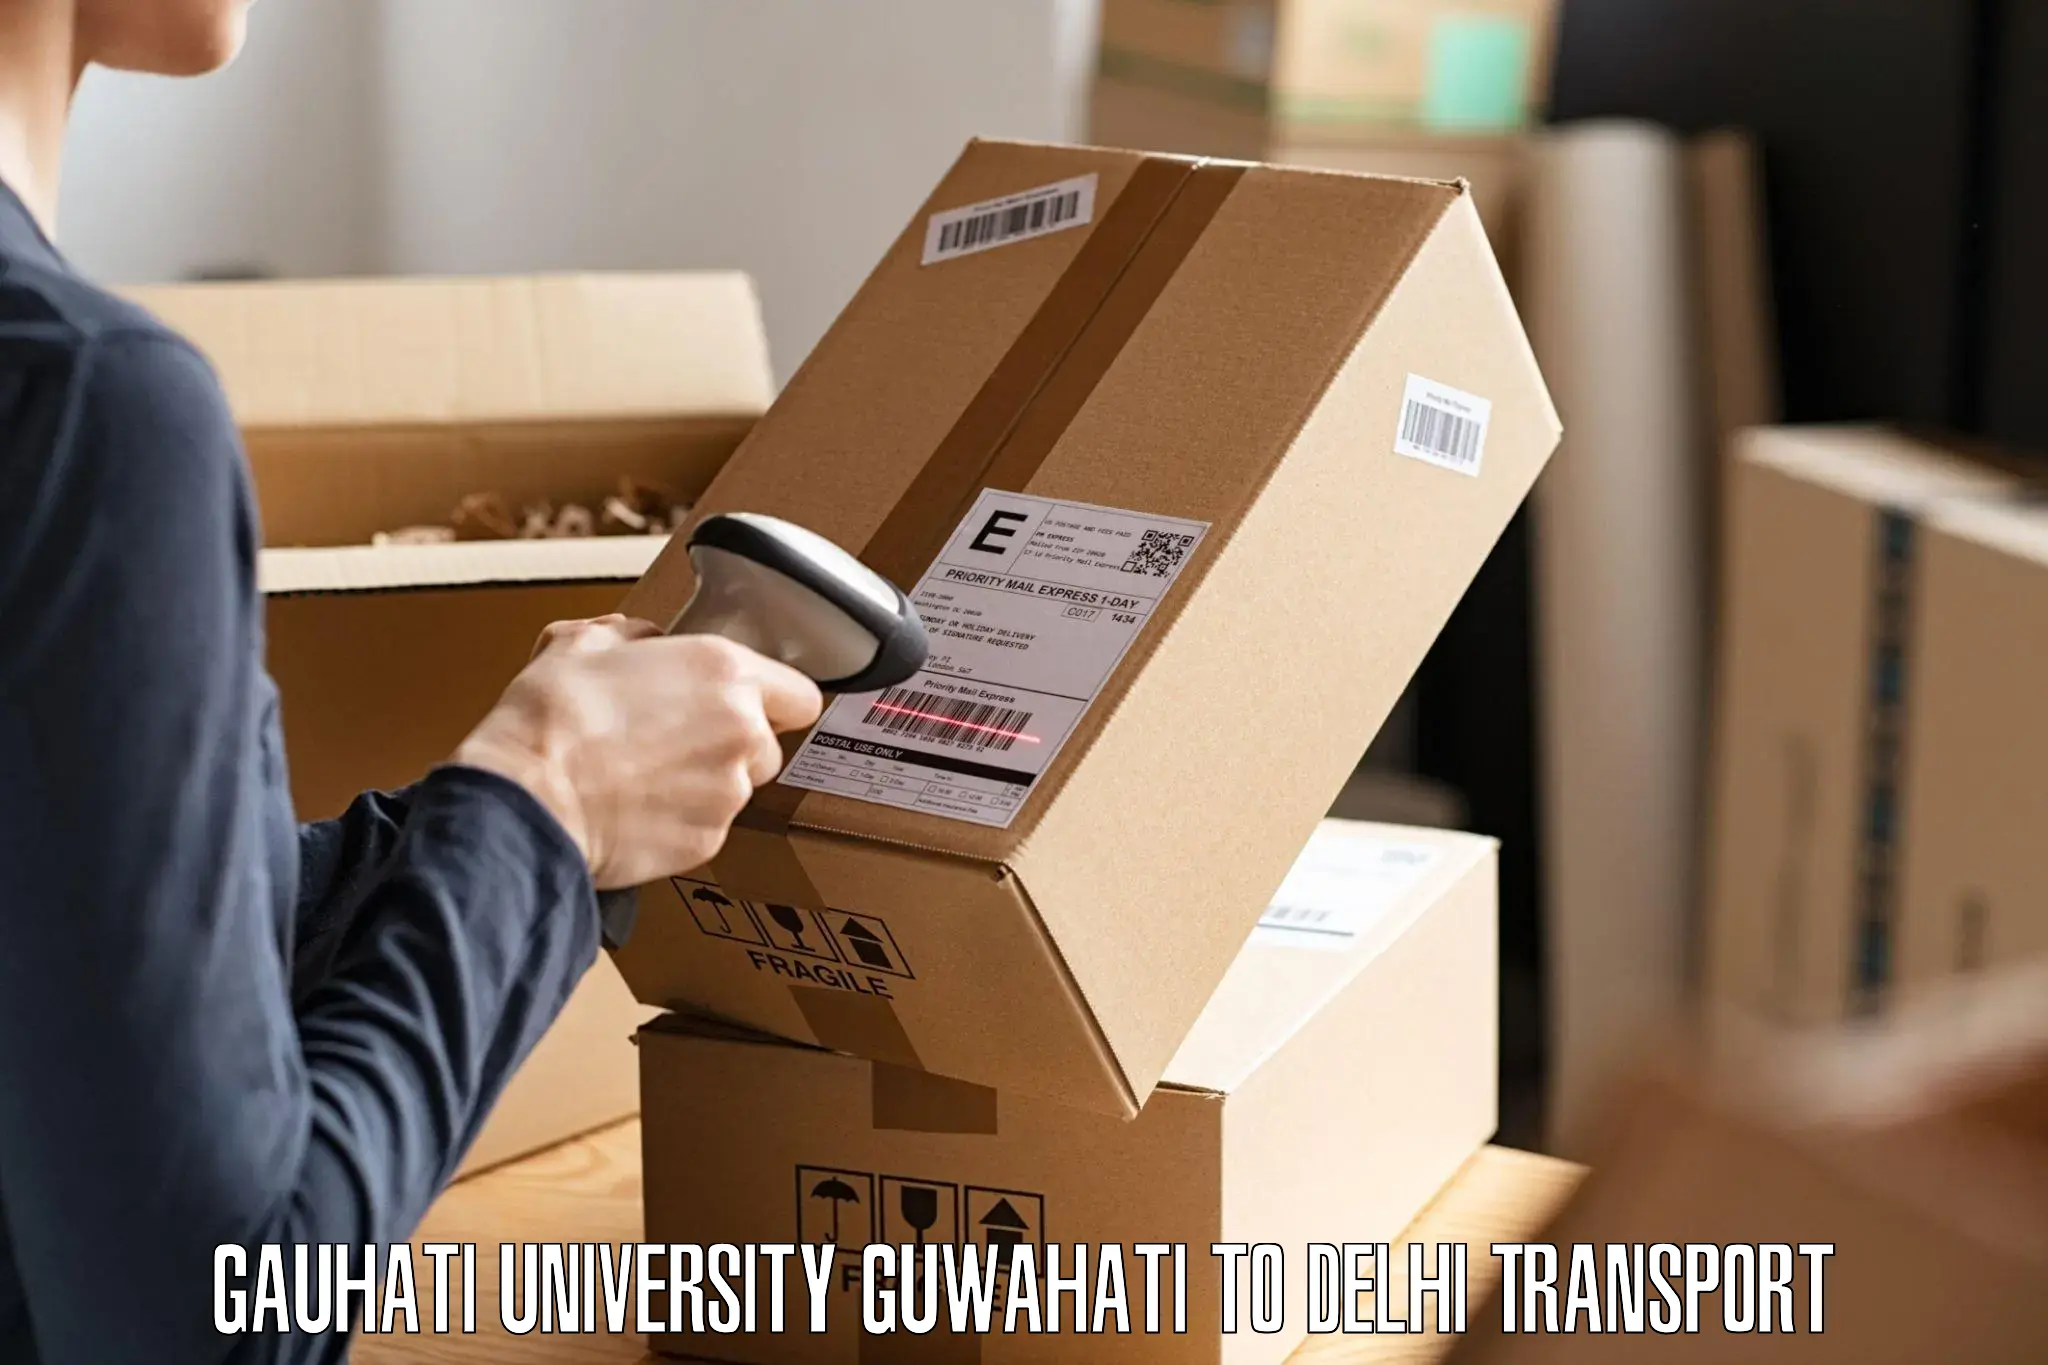 Pick up transport service in Gauhati University Guwahati to University of Delhi